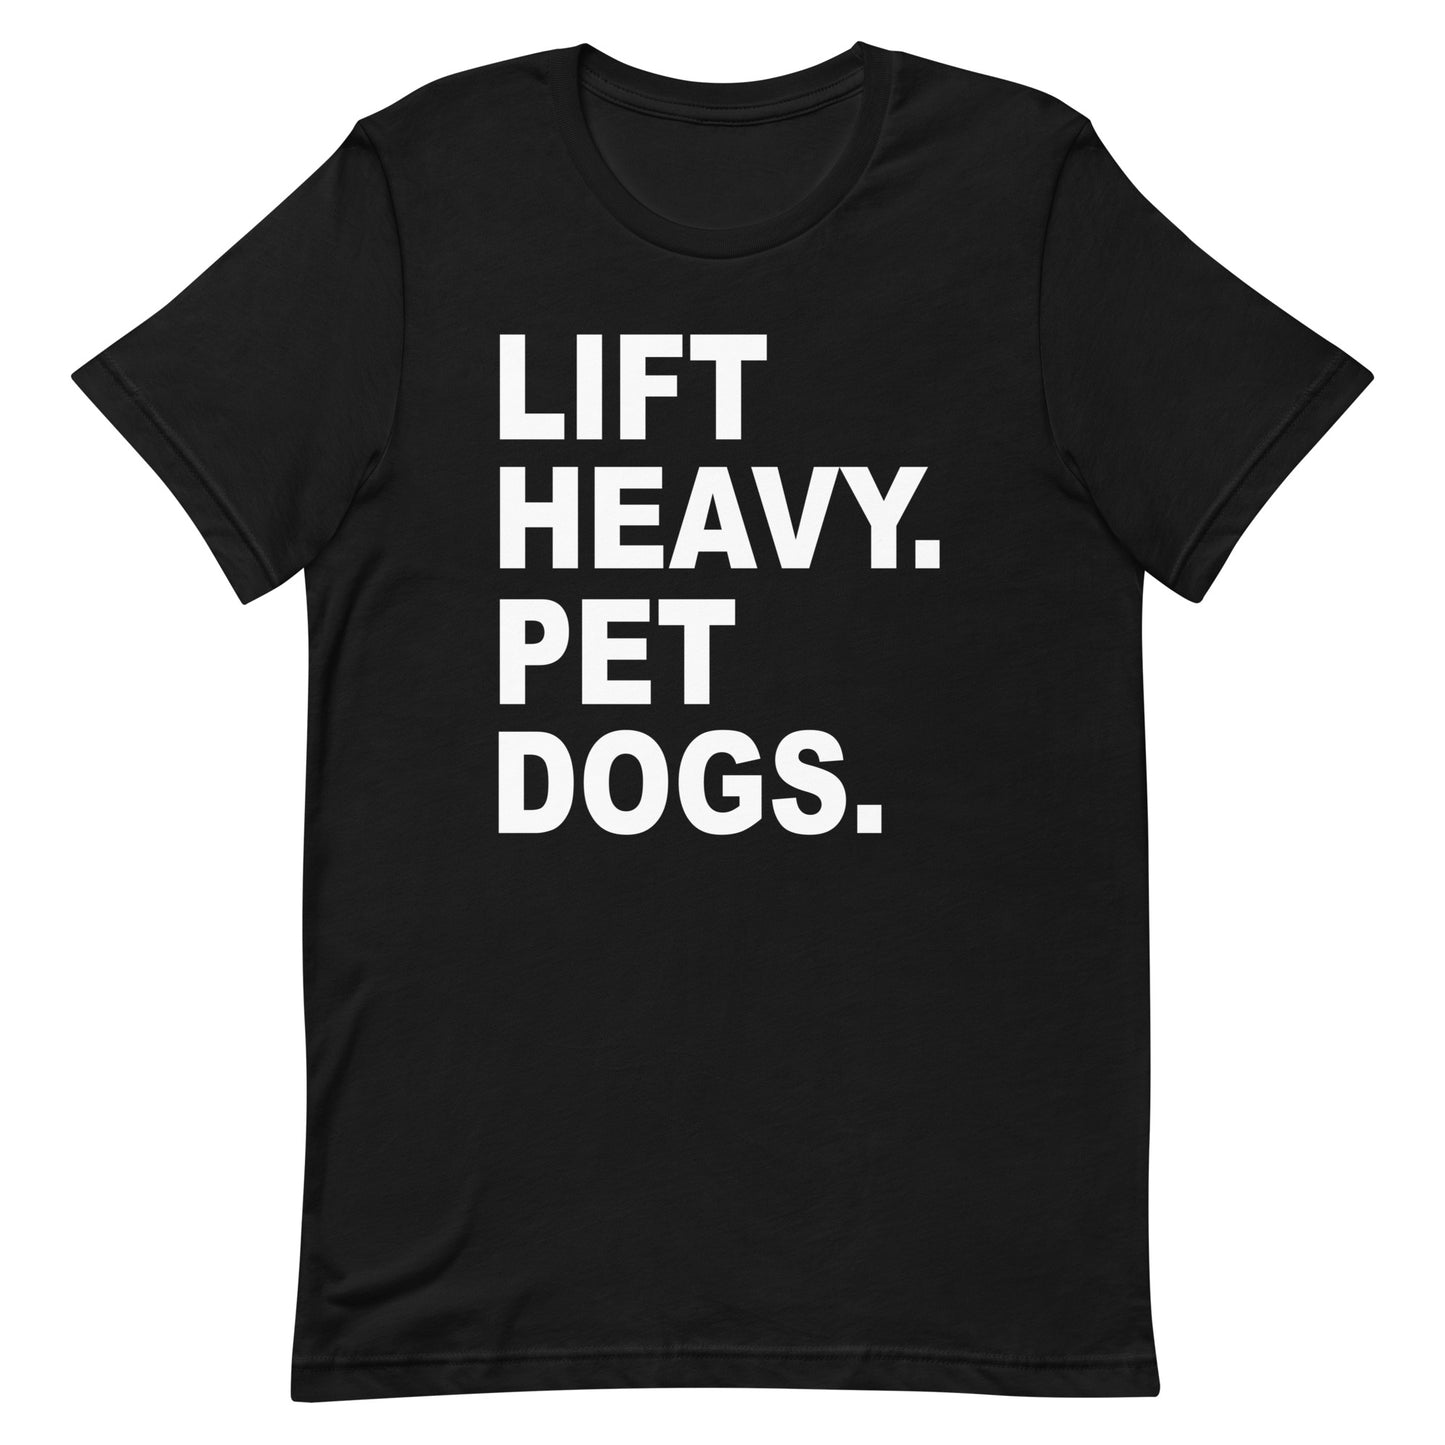 Lift Heavy Pet Dogs T-Shirt